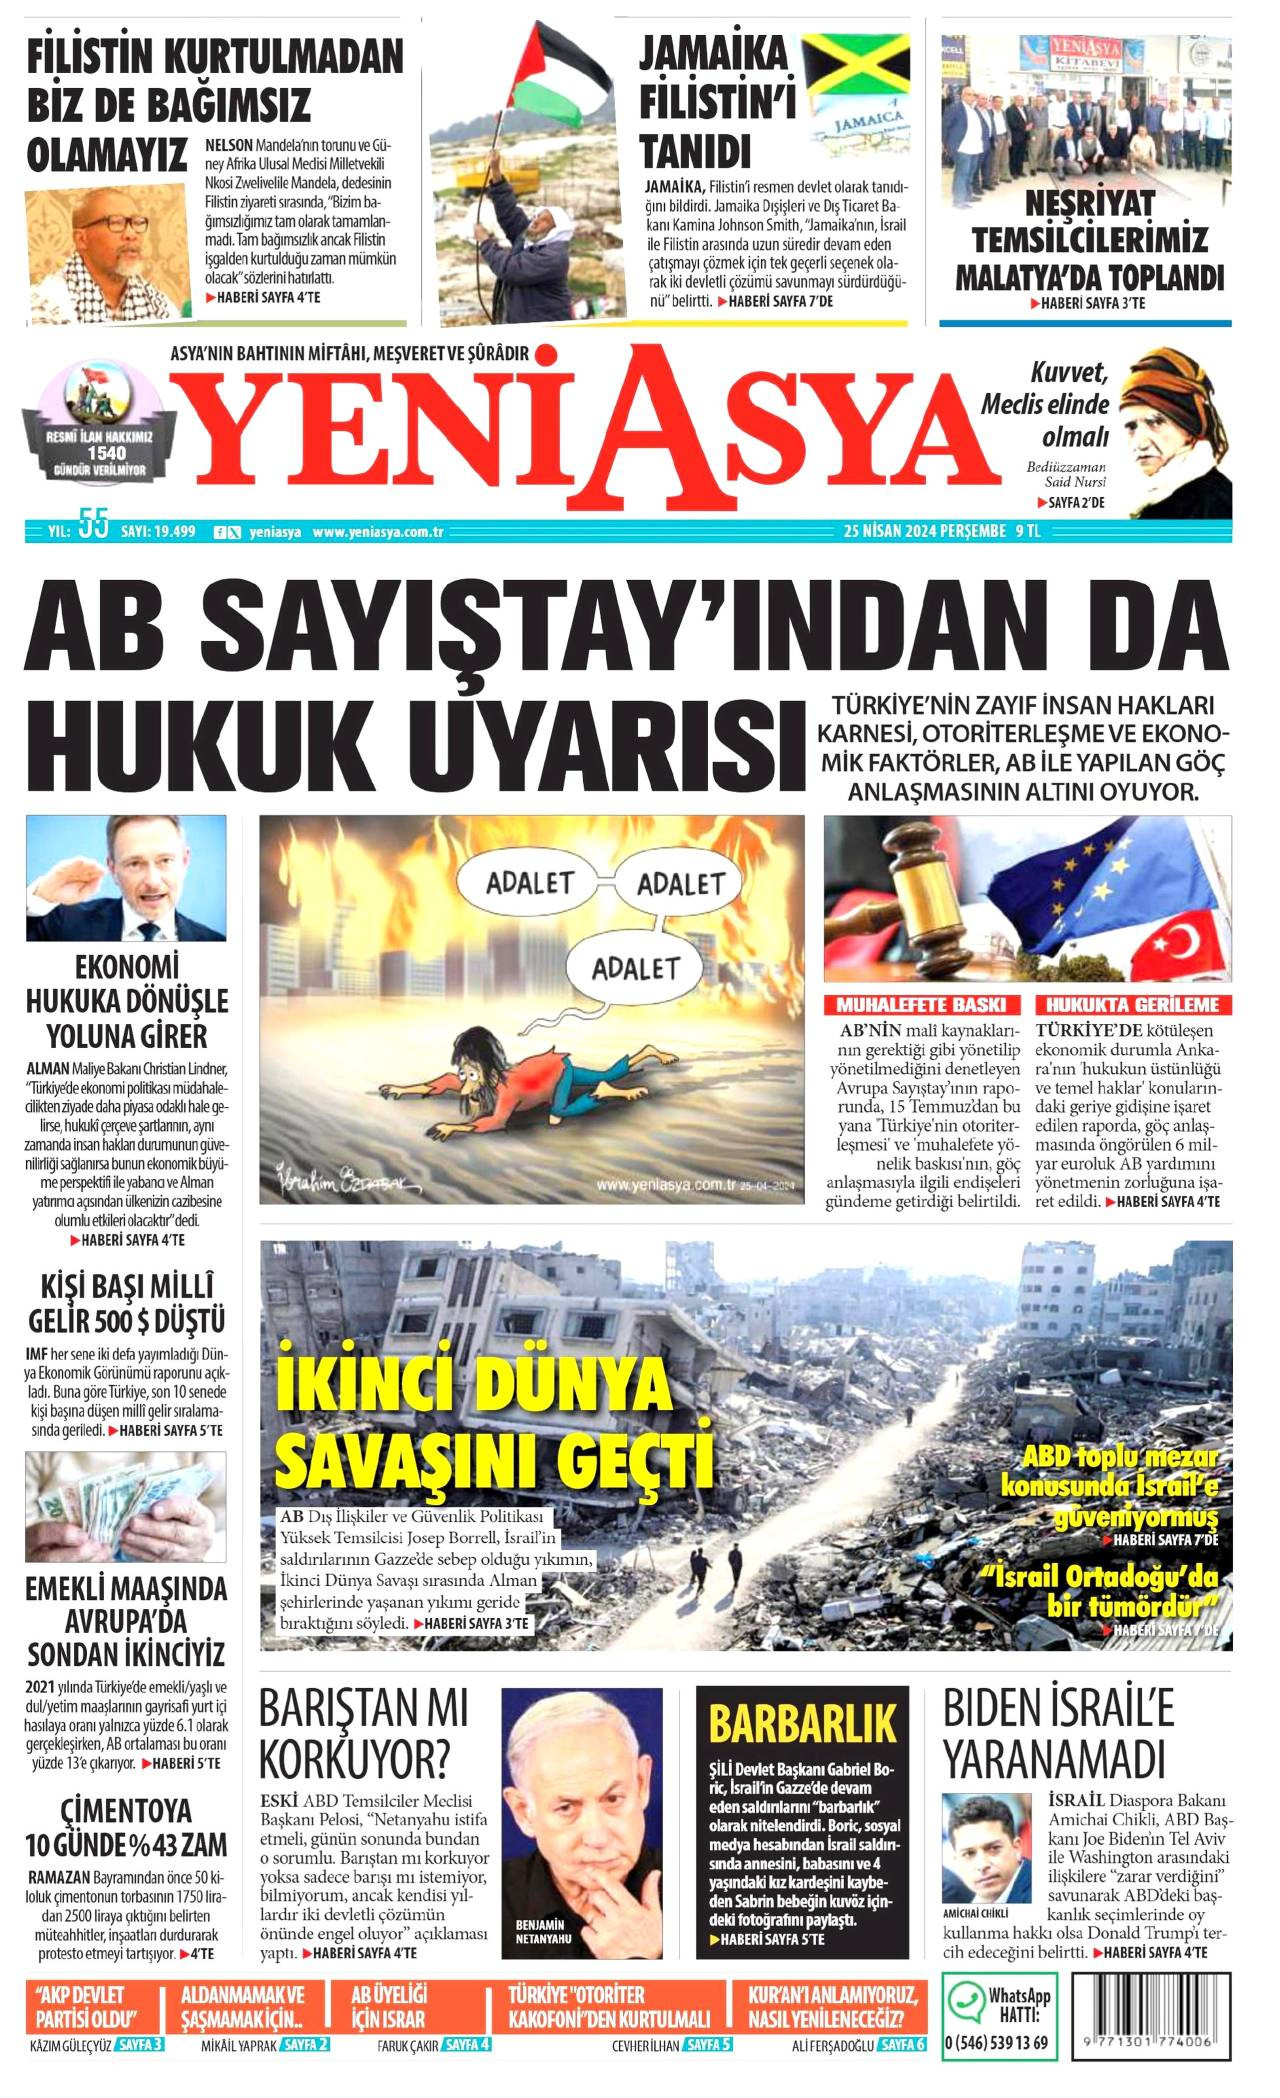 Yeni Asya Gazetesi